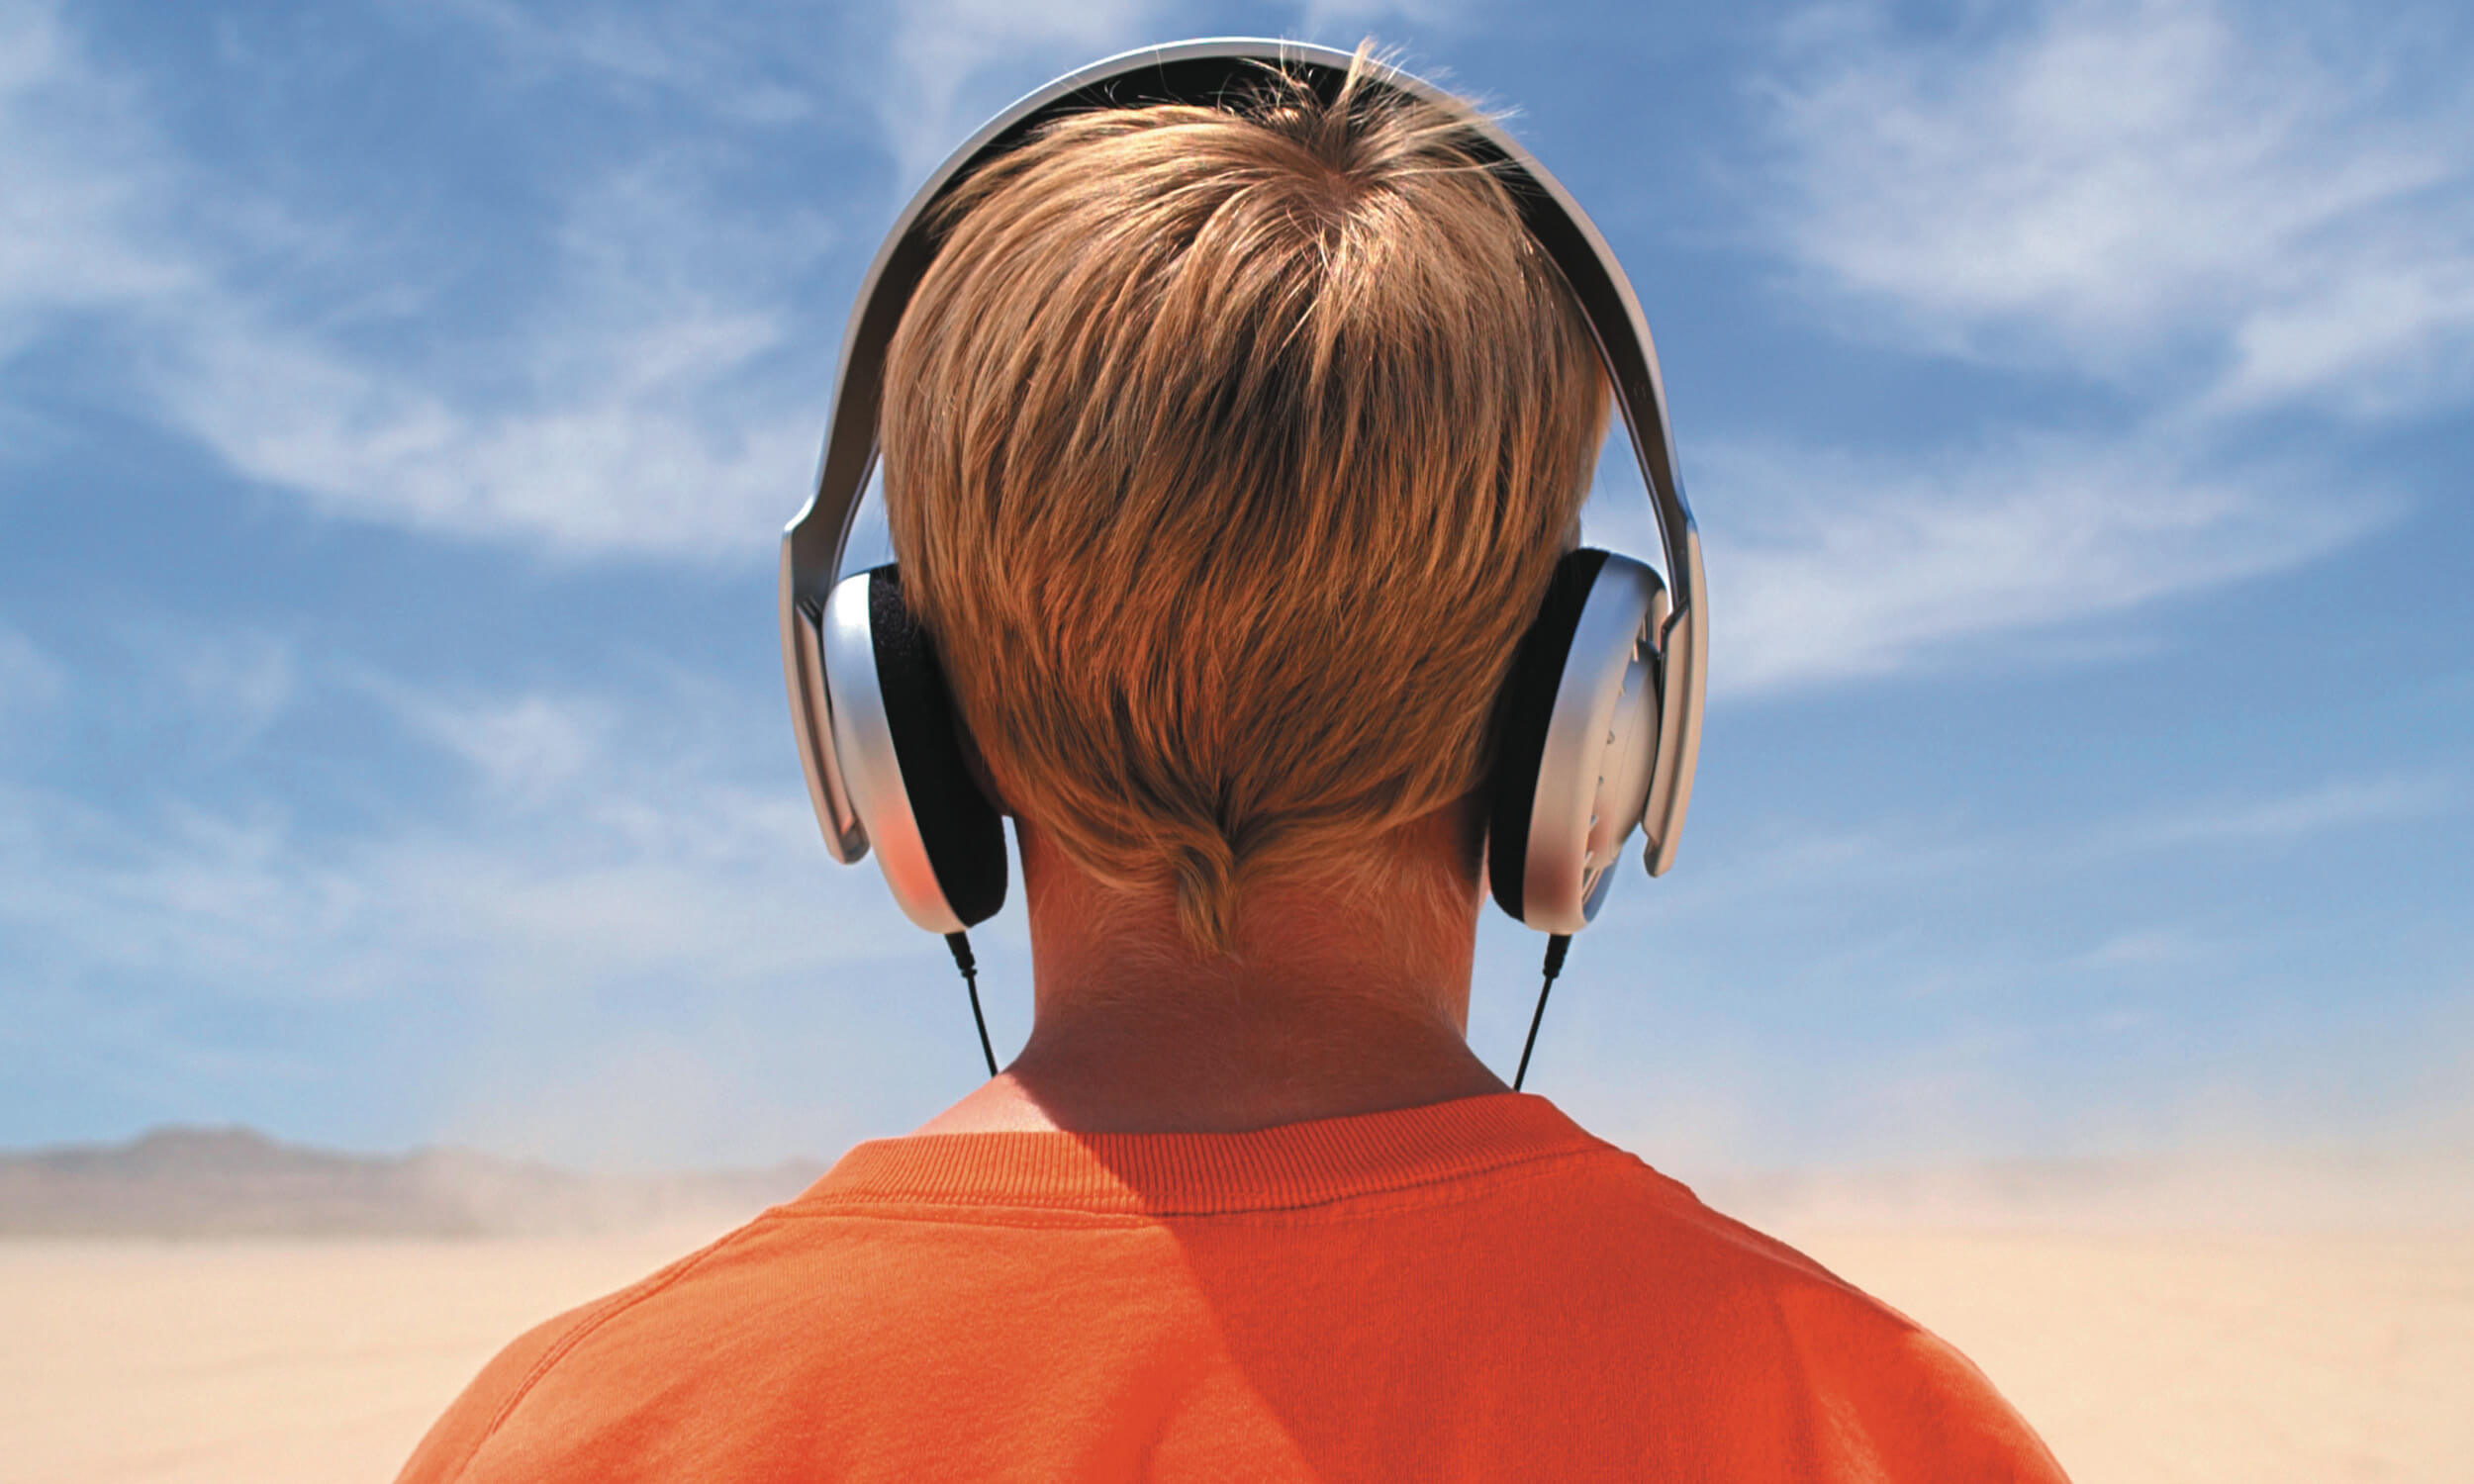 Boy listening to music on headphones